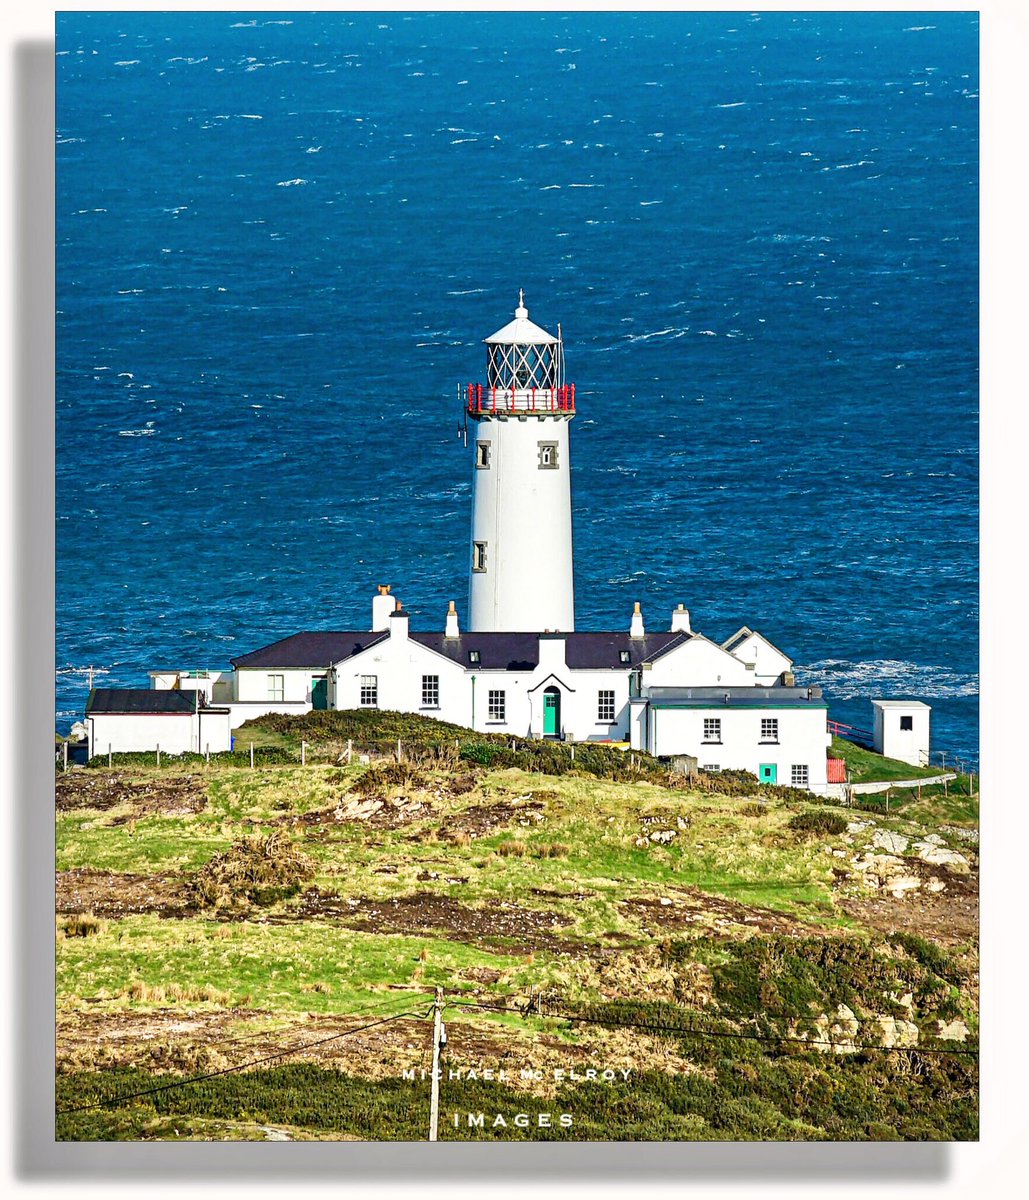 Fanad #lighthouse #countydonegal #Ireland @StormHour @gtlighthouses @ThePhotoHour #coast #WildAtlanticWay #WildAtlanticWayDonegal @IrishLights @AP_Magazine @MetEireann @DiscoverIreland #coastalliving #SEA #Donegal #Earth #Irish #landscape #Outdoor #landscapephotography